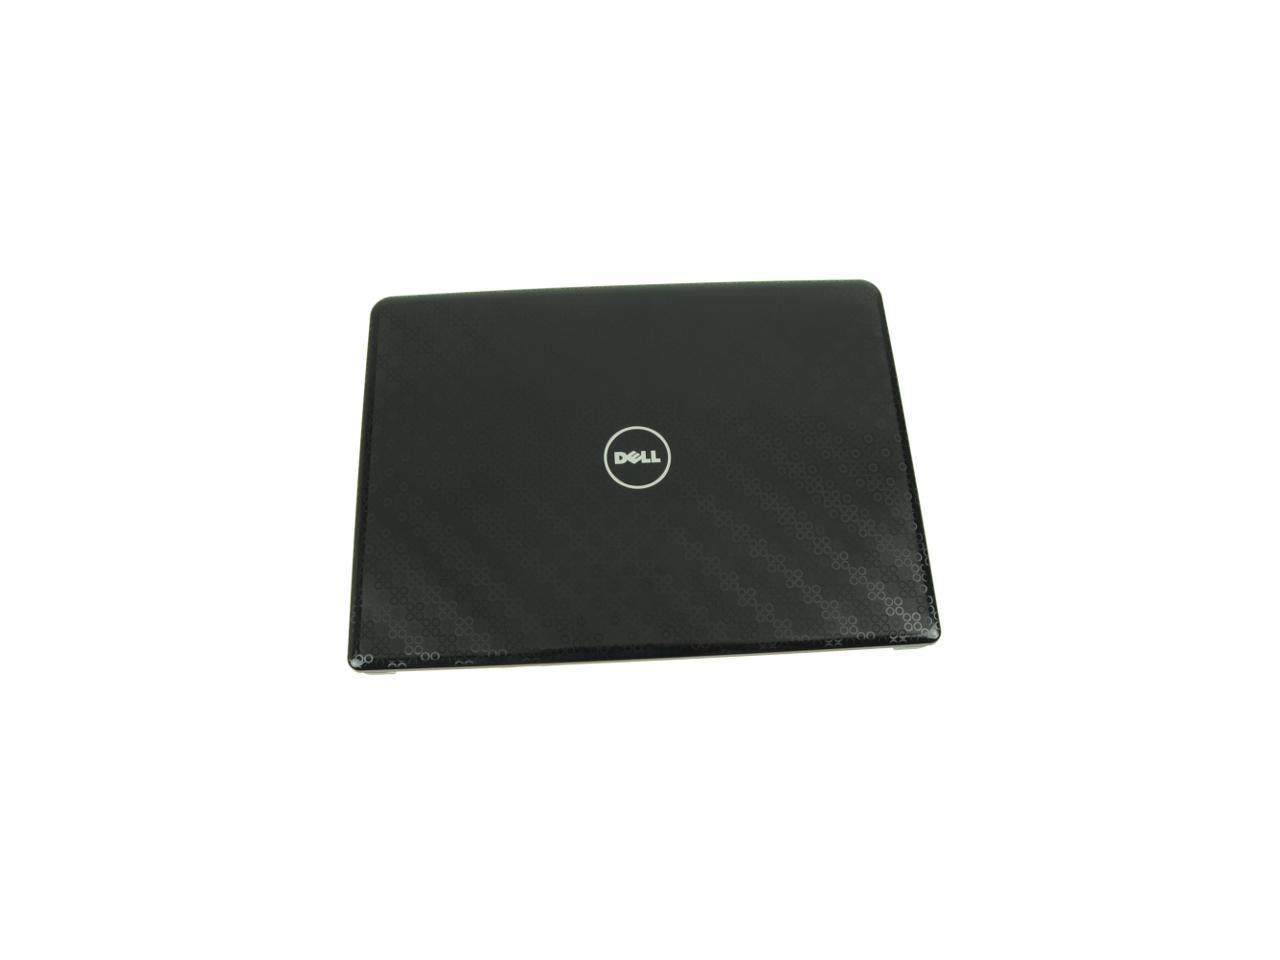 New OEM Dell N72GG Inspiron N4020 N4030 14" LCD Back Cover Top Lid 0N72GG N72GG 